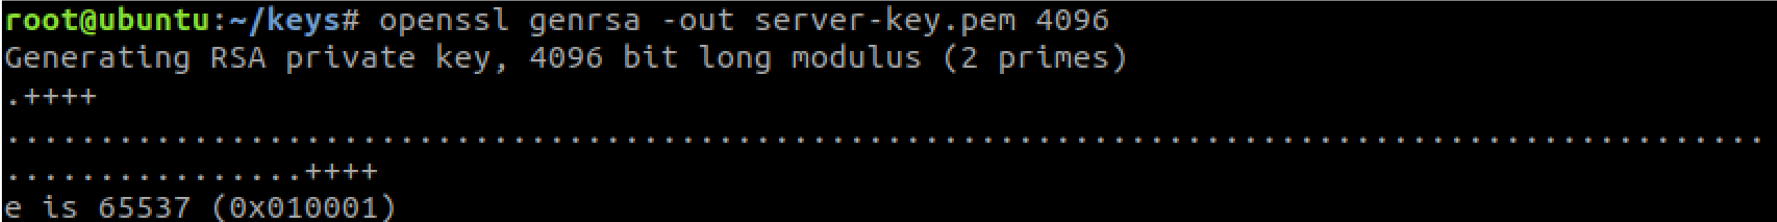 generate server key